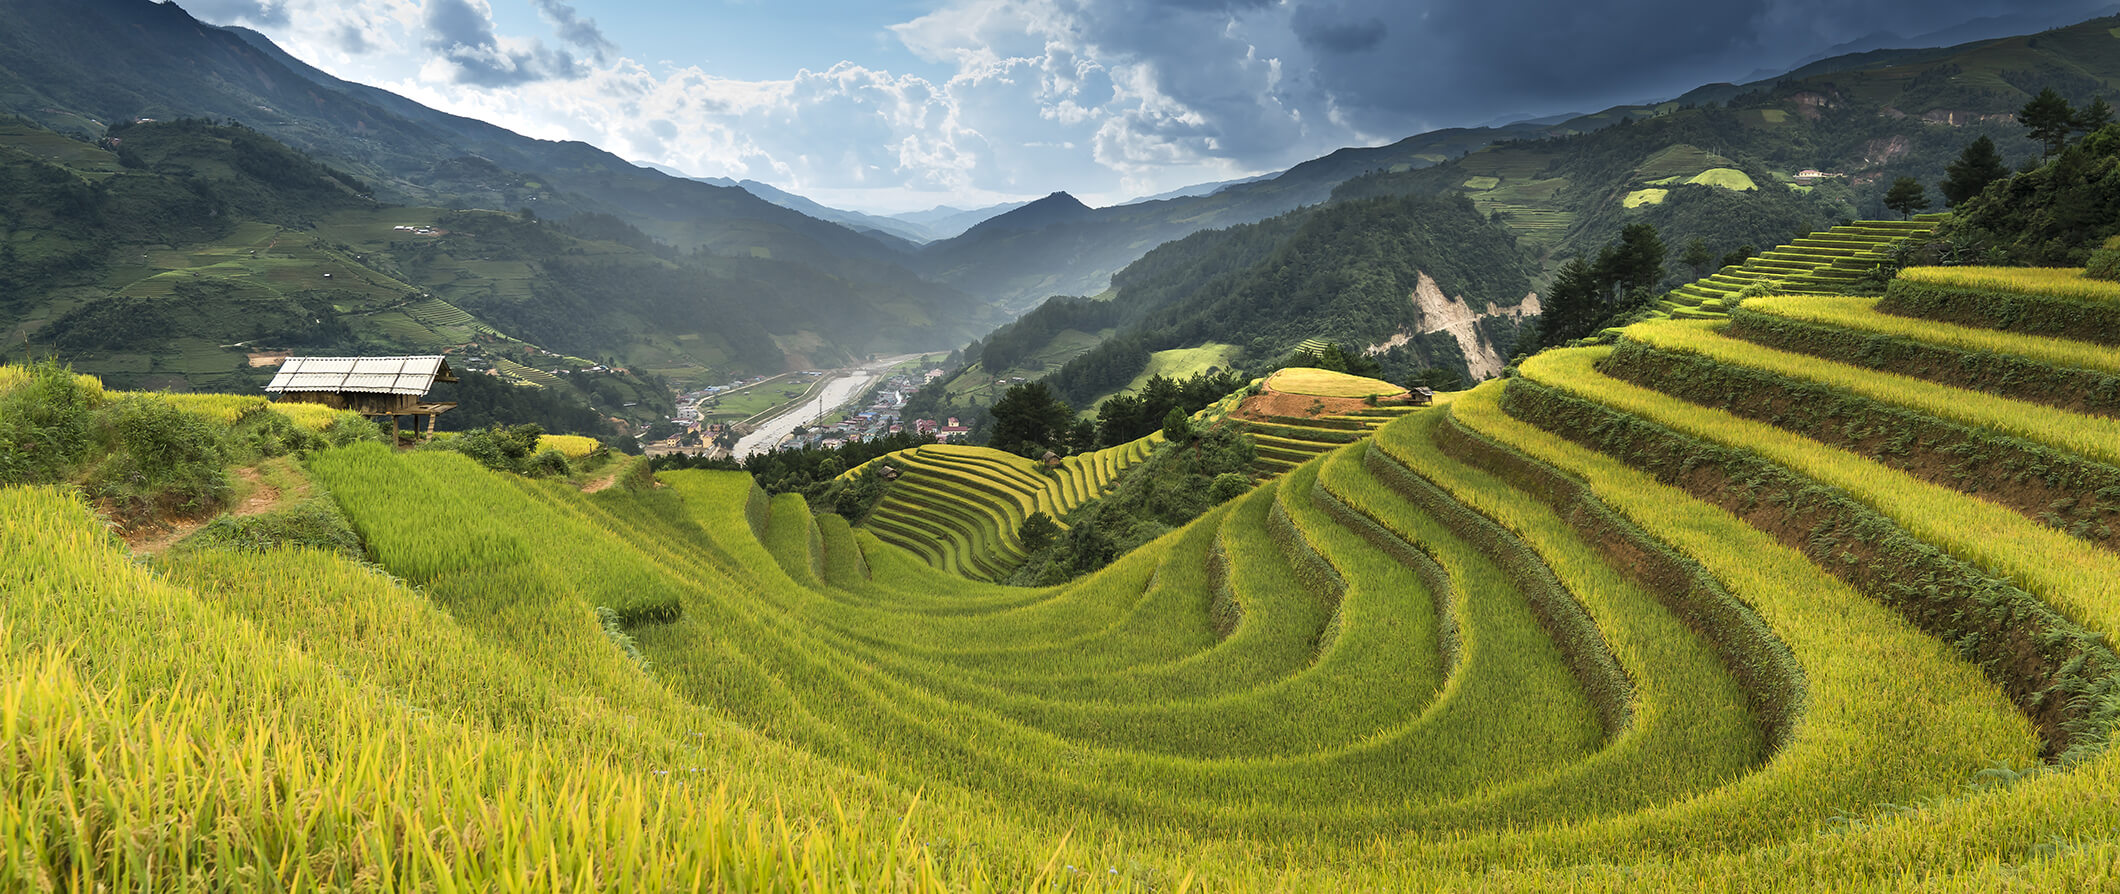 Green rice fields in Vietnam